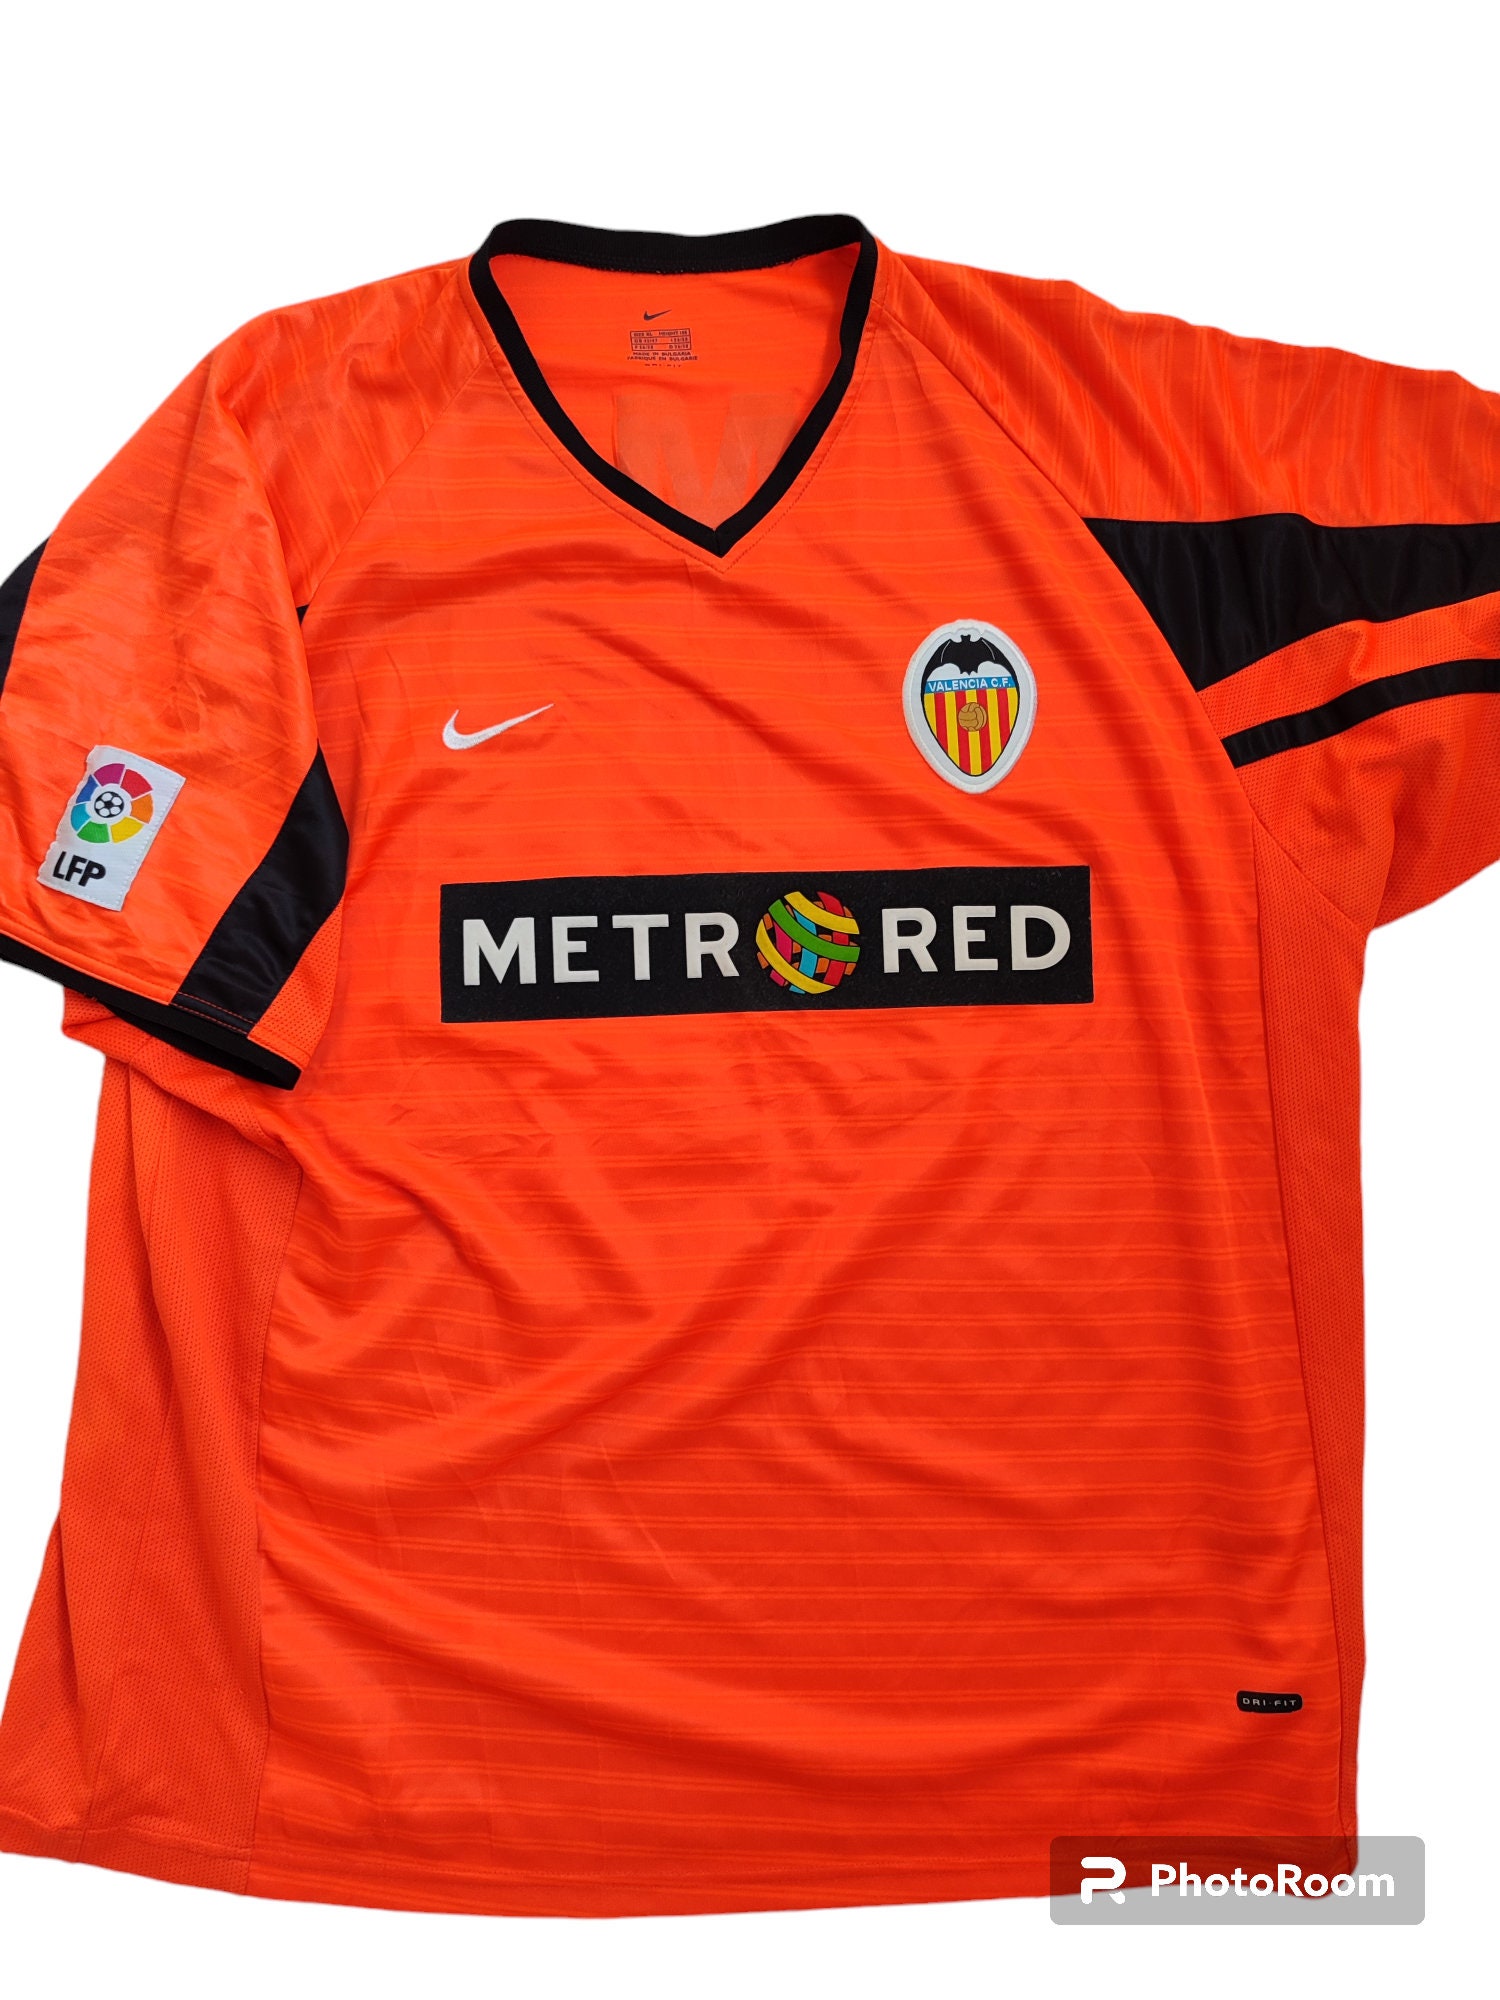 Valencia CF Pablo Aimar shirt